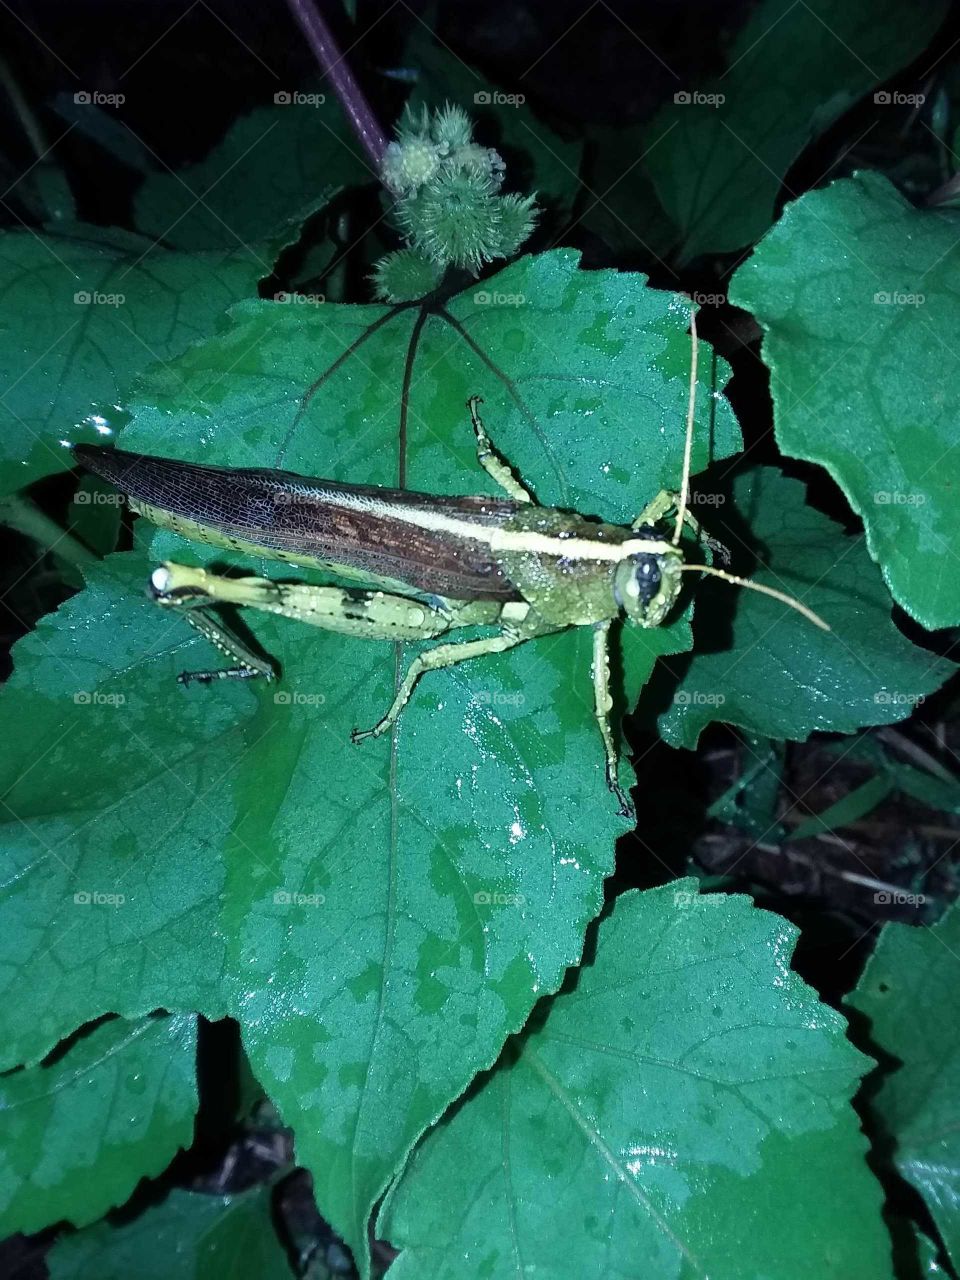 due covered grasshopper